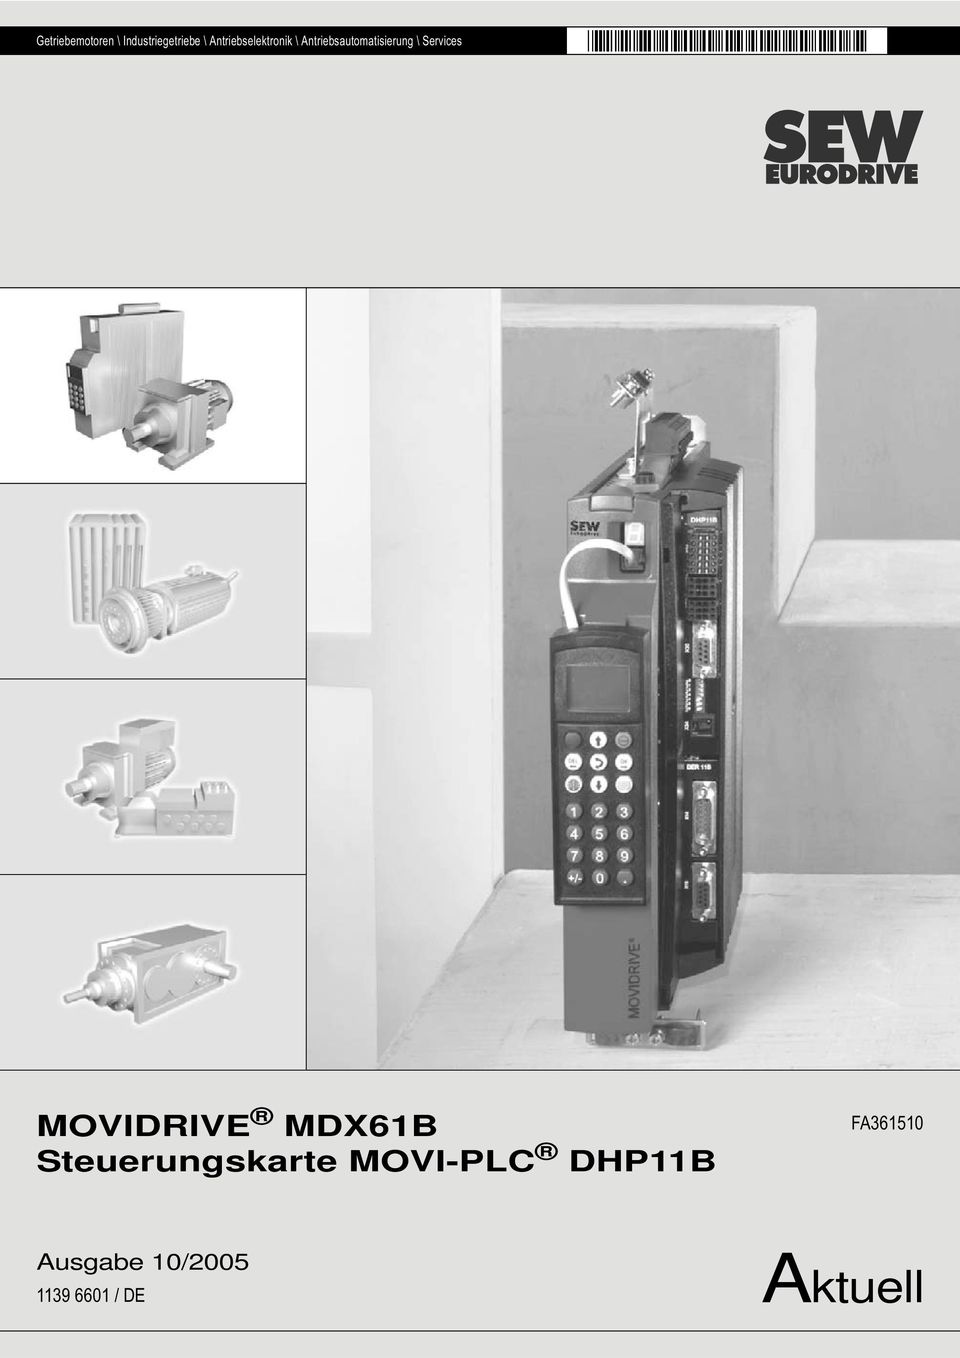 Services MOVIDRIVE MDX61B Steuerungskarte